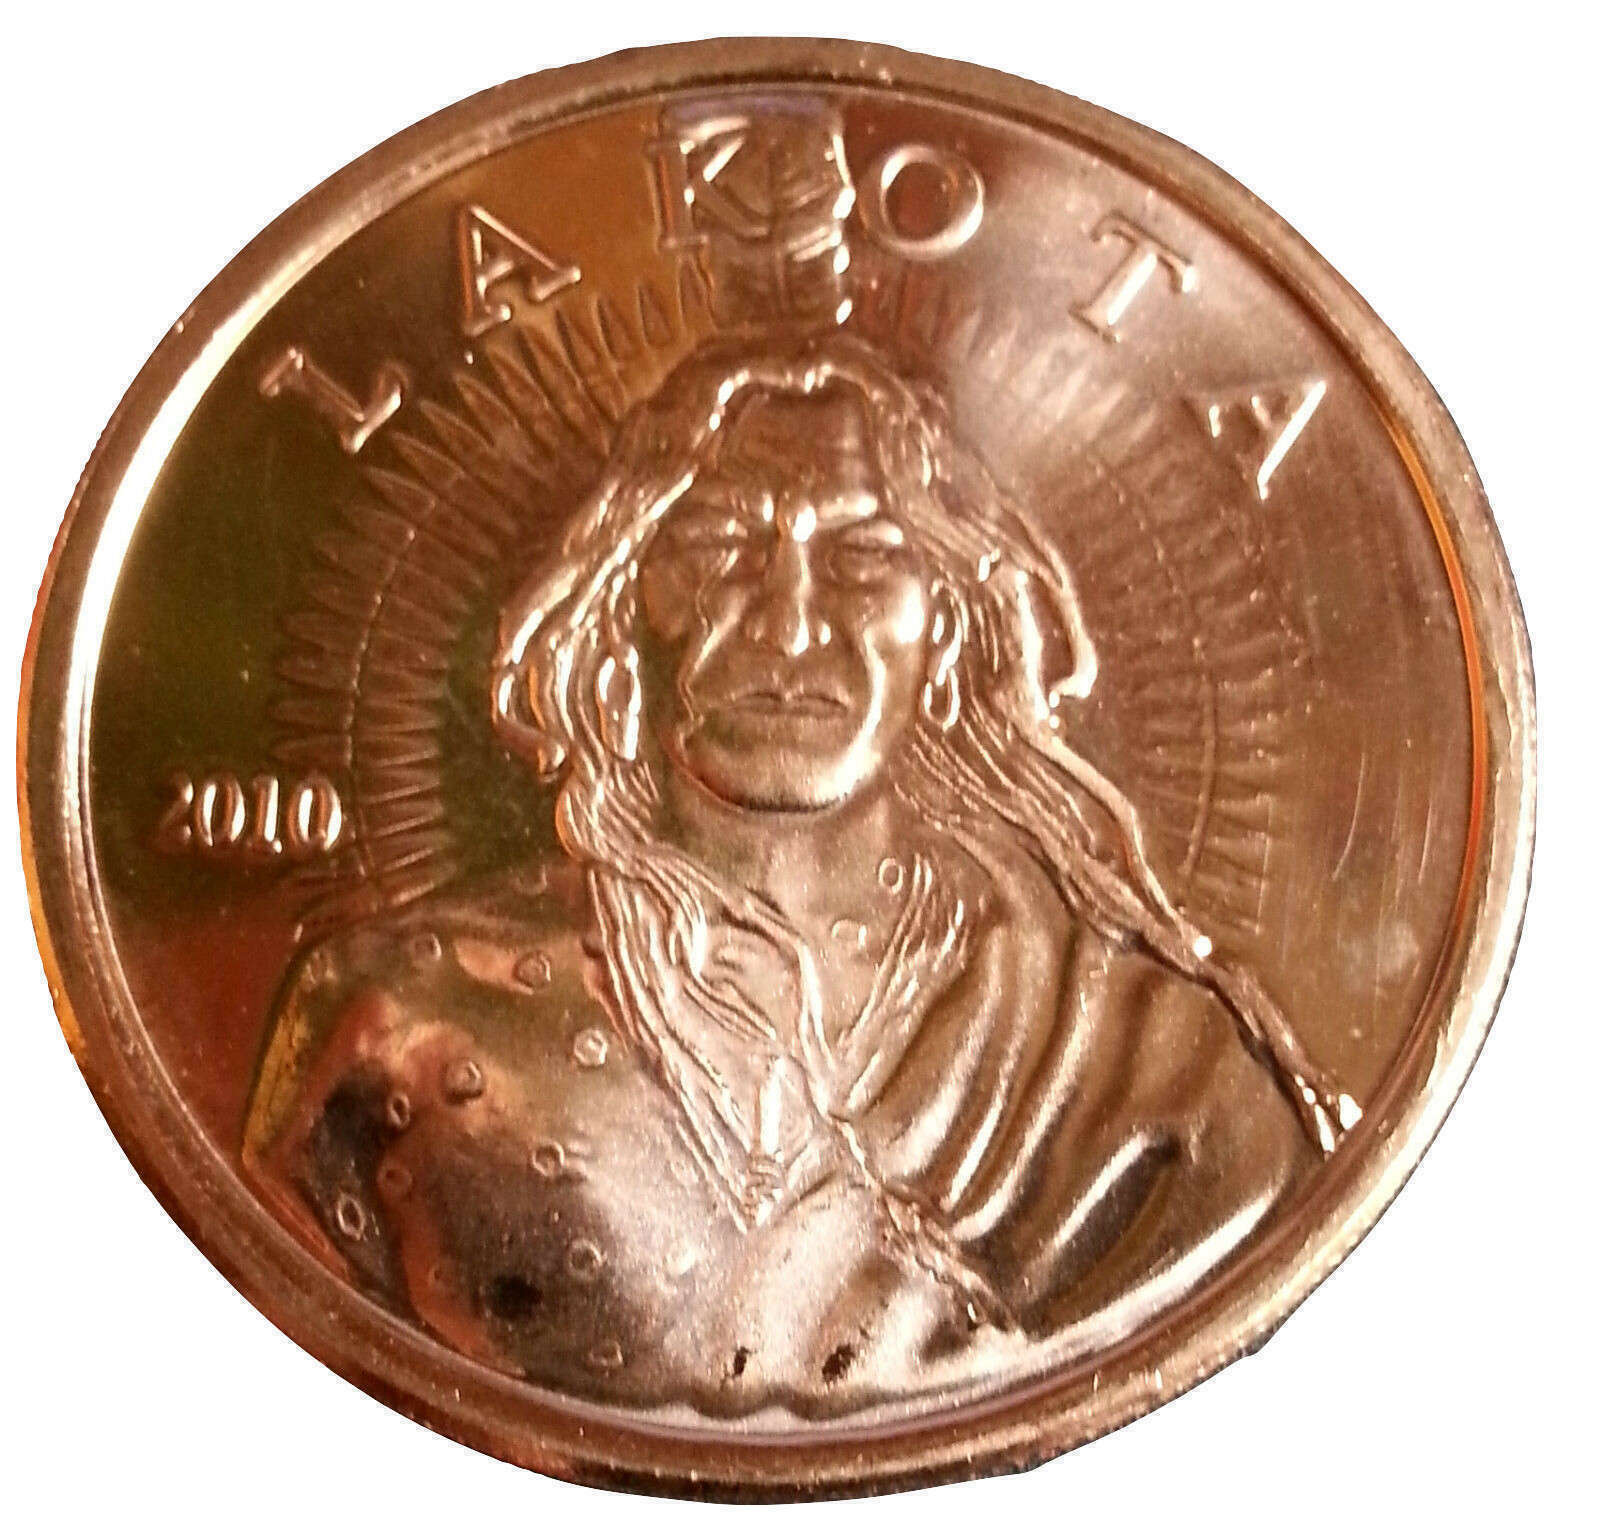 Americana Indiano Lakota Lingotto Moneta Rotonda 999 Rame 1 Oz. Puro Metallo